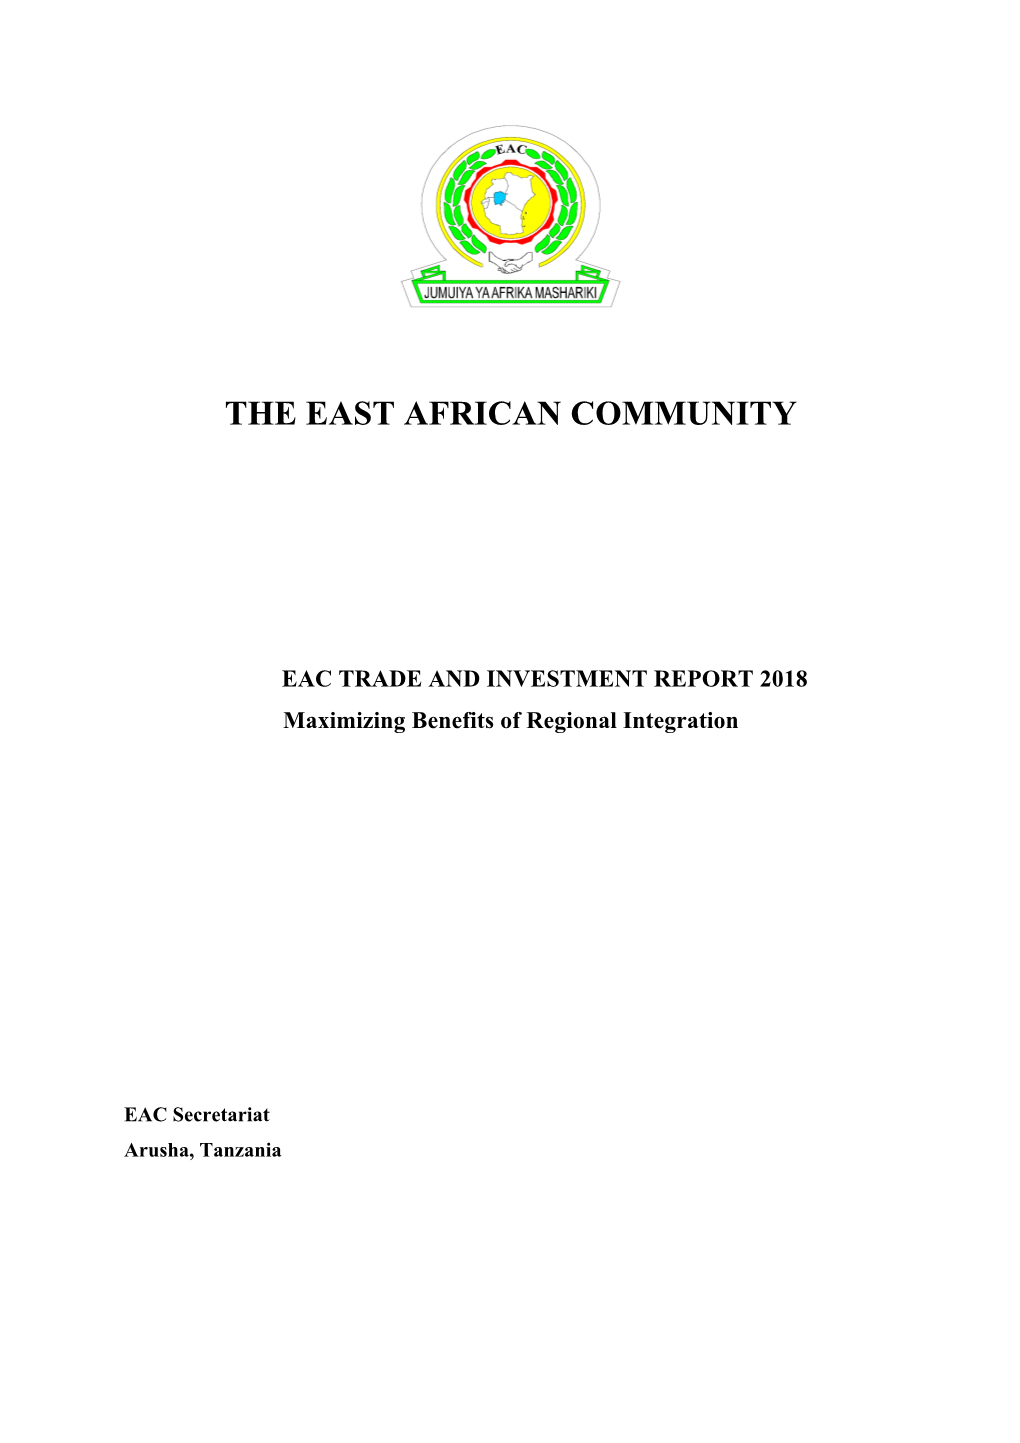 EAC Trade Report 2018.Pdf (4.522Mb)